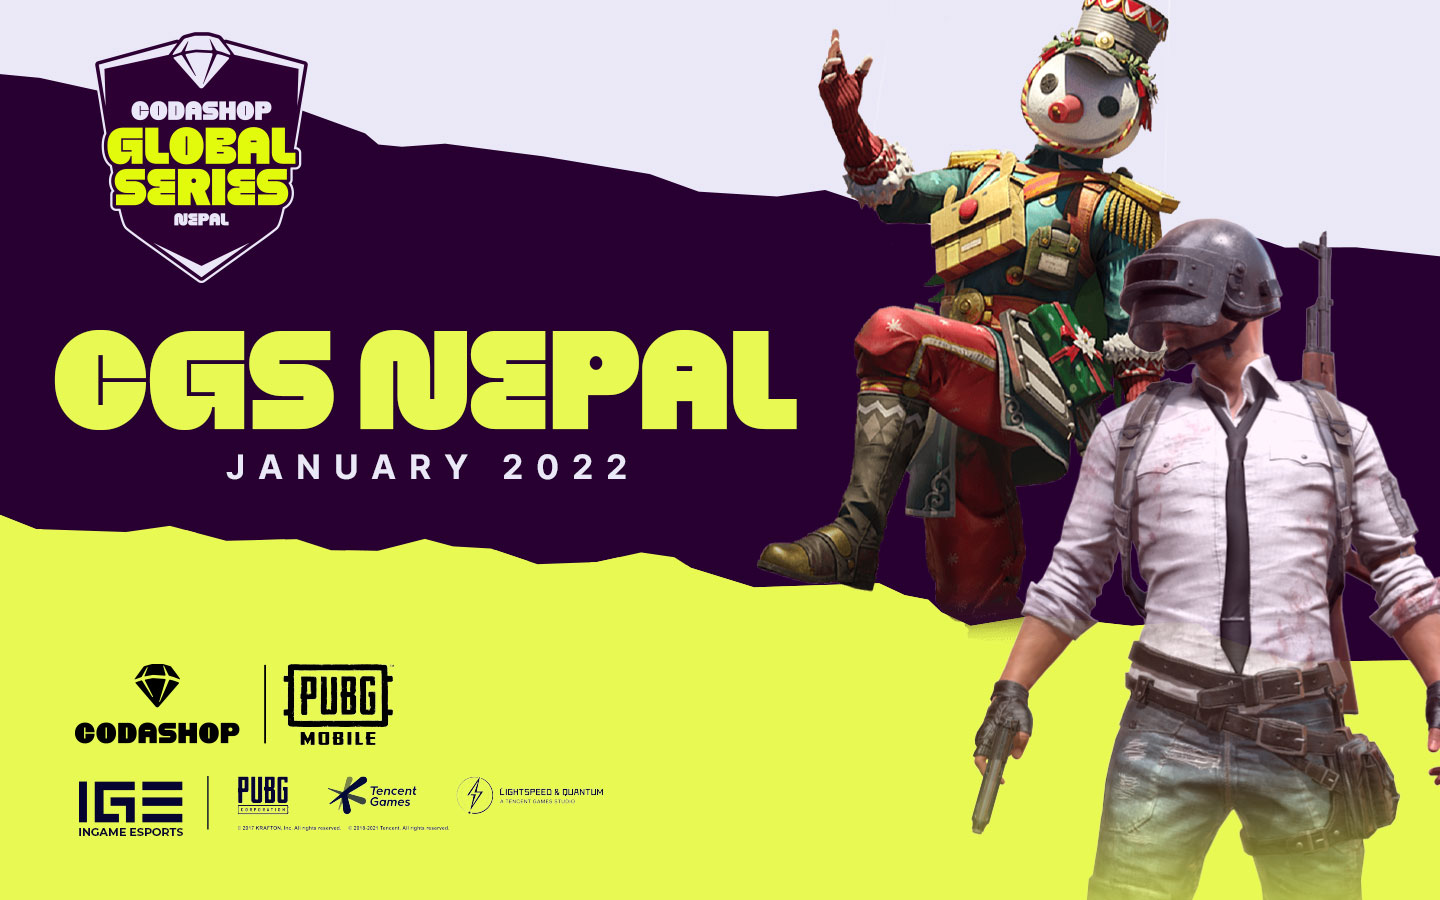 Codashop Global Series Nepal - Jan '22